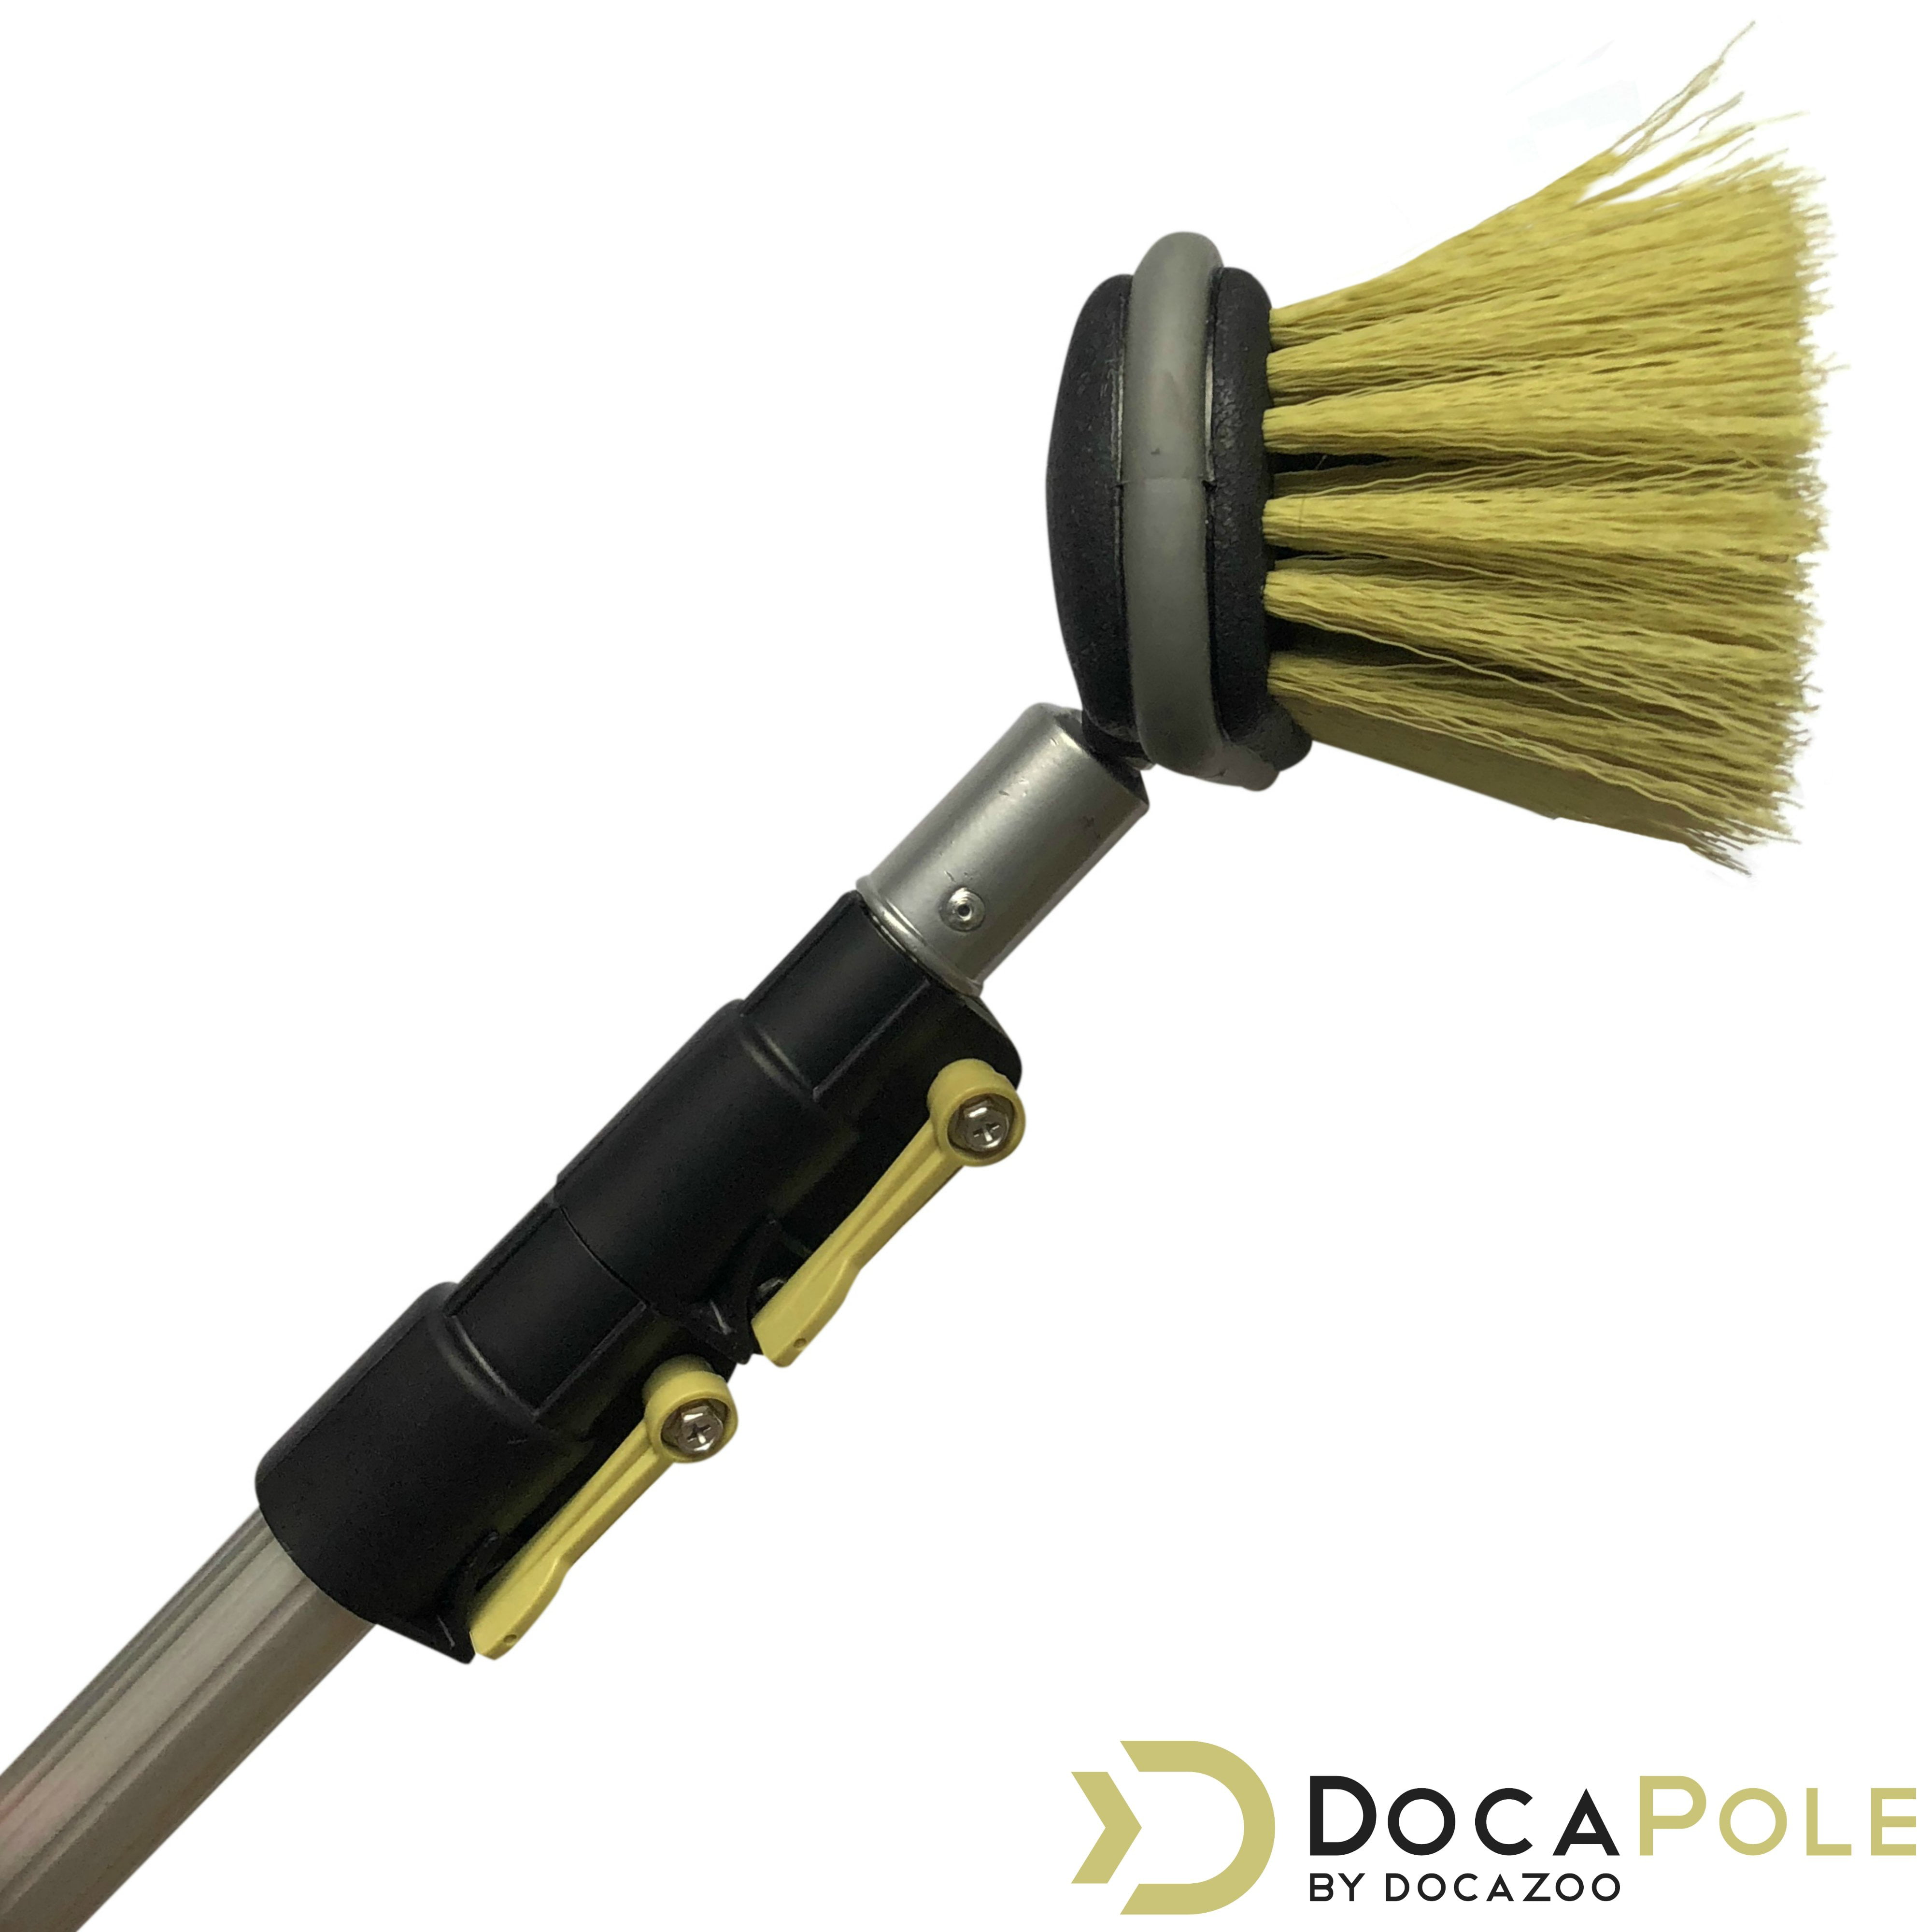 DocaPole Medium Bristle Deck Brush + 5-12' Extension Pole|11" Scrub Telescopic Brush For Cleaning Siding